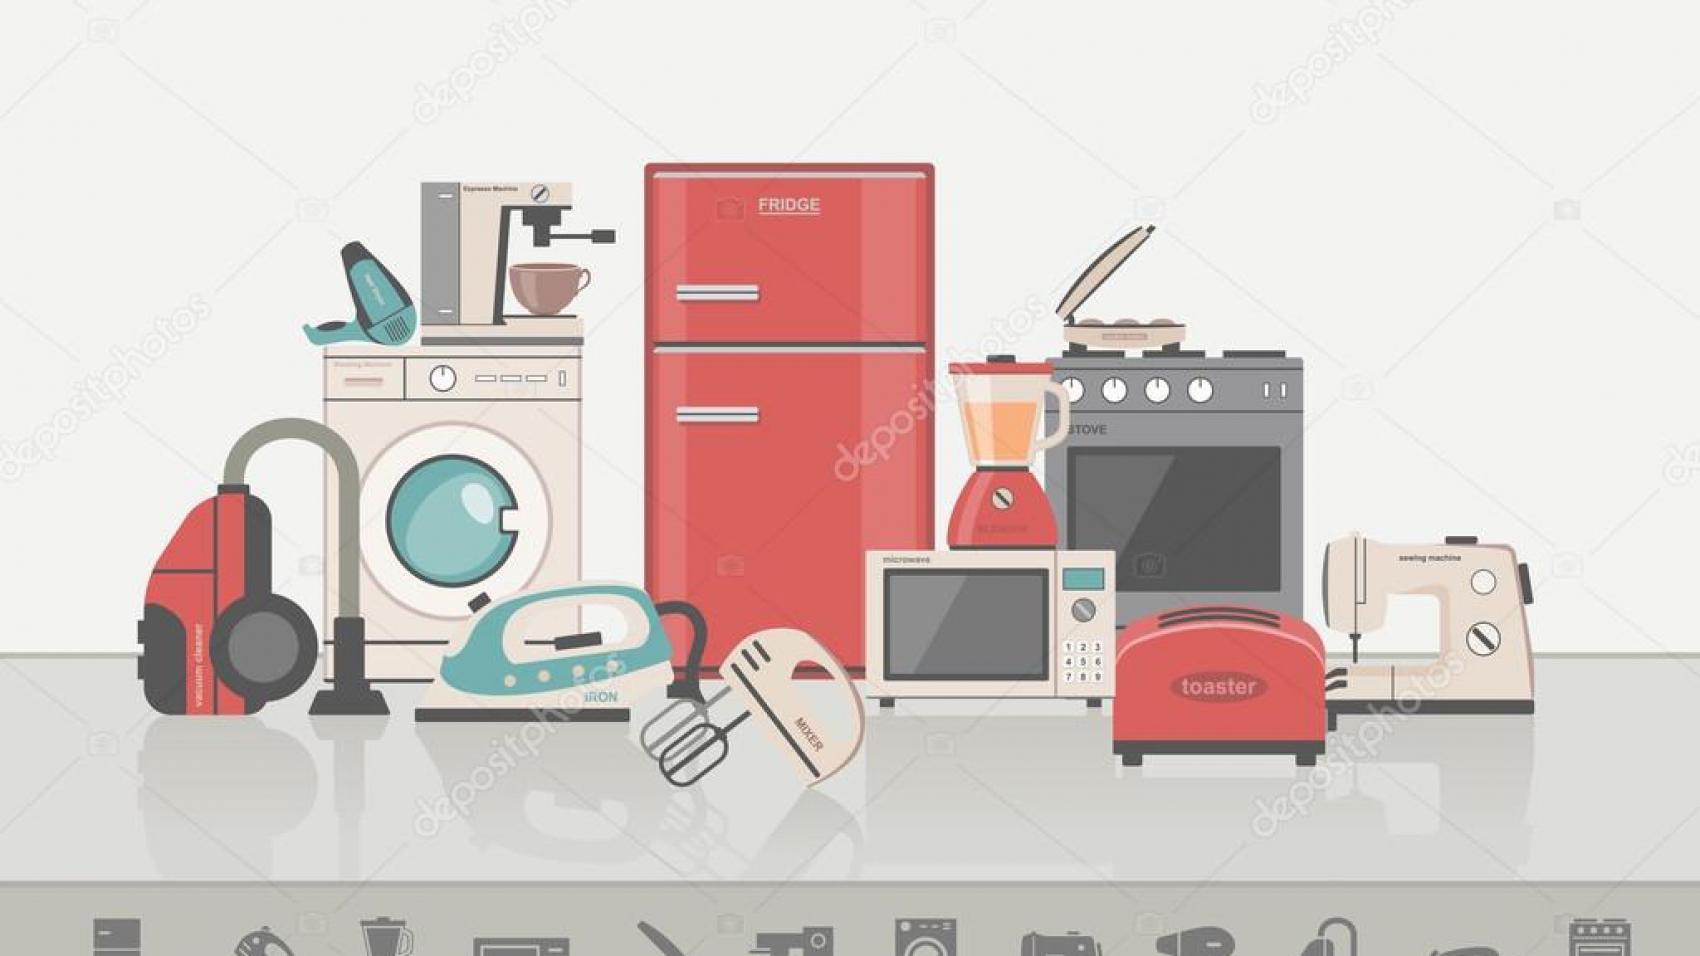 depositphotos_76027011-stock-illustration-home-appliance